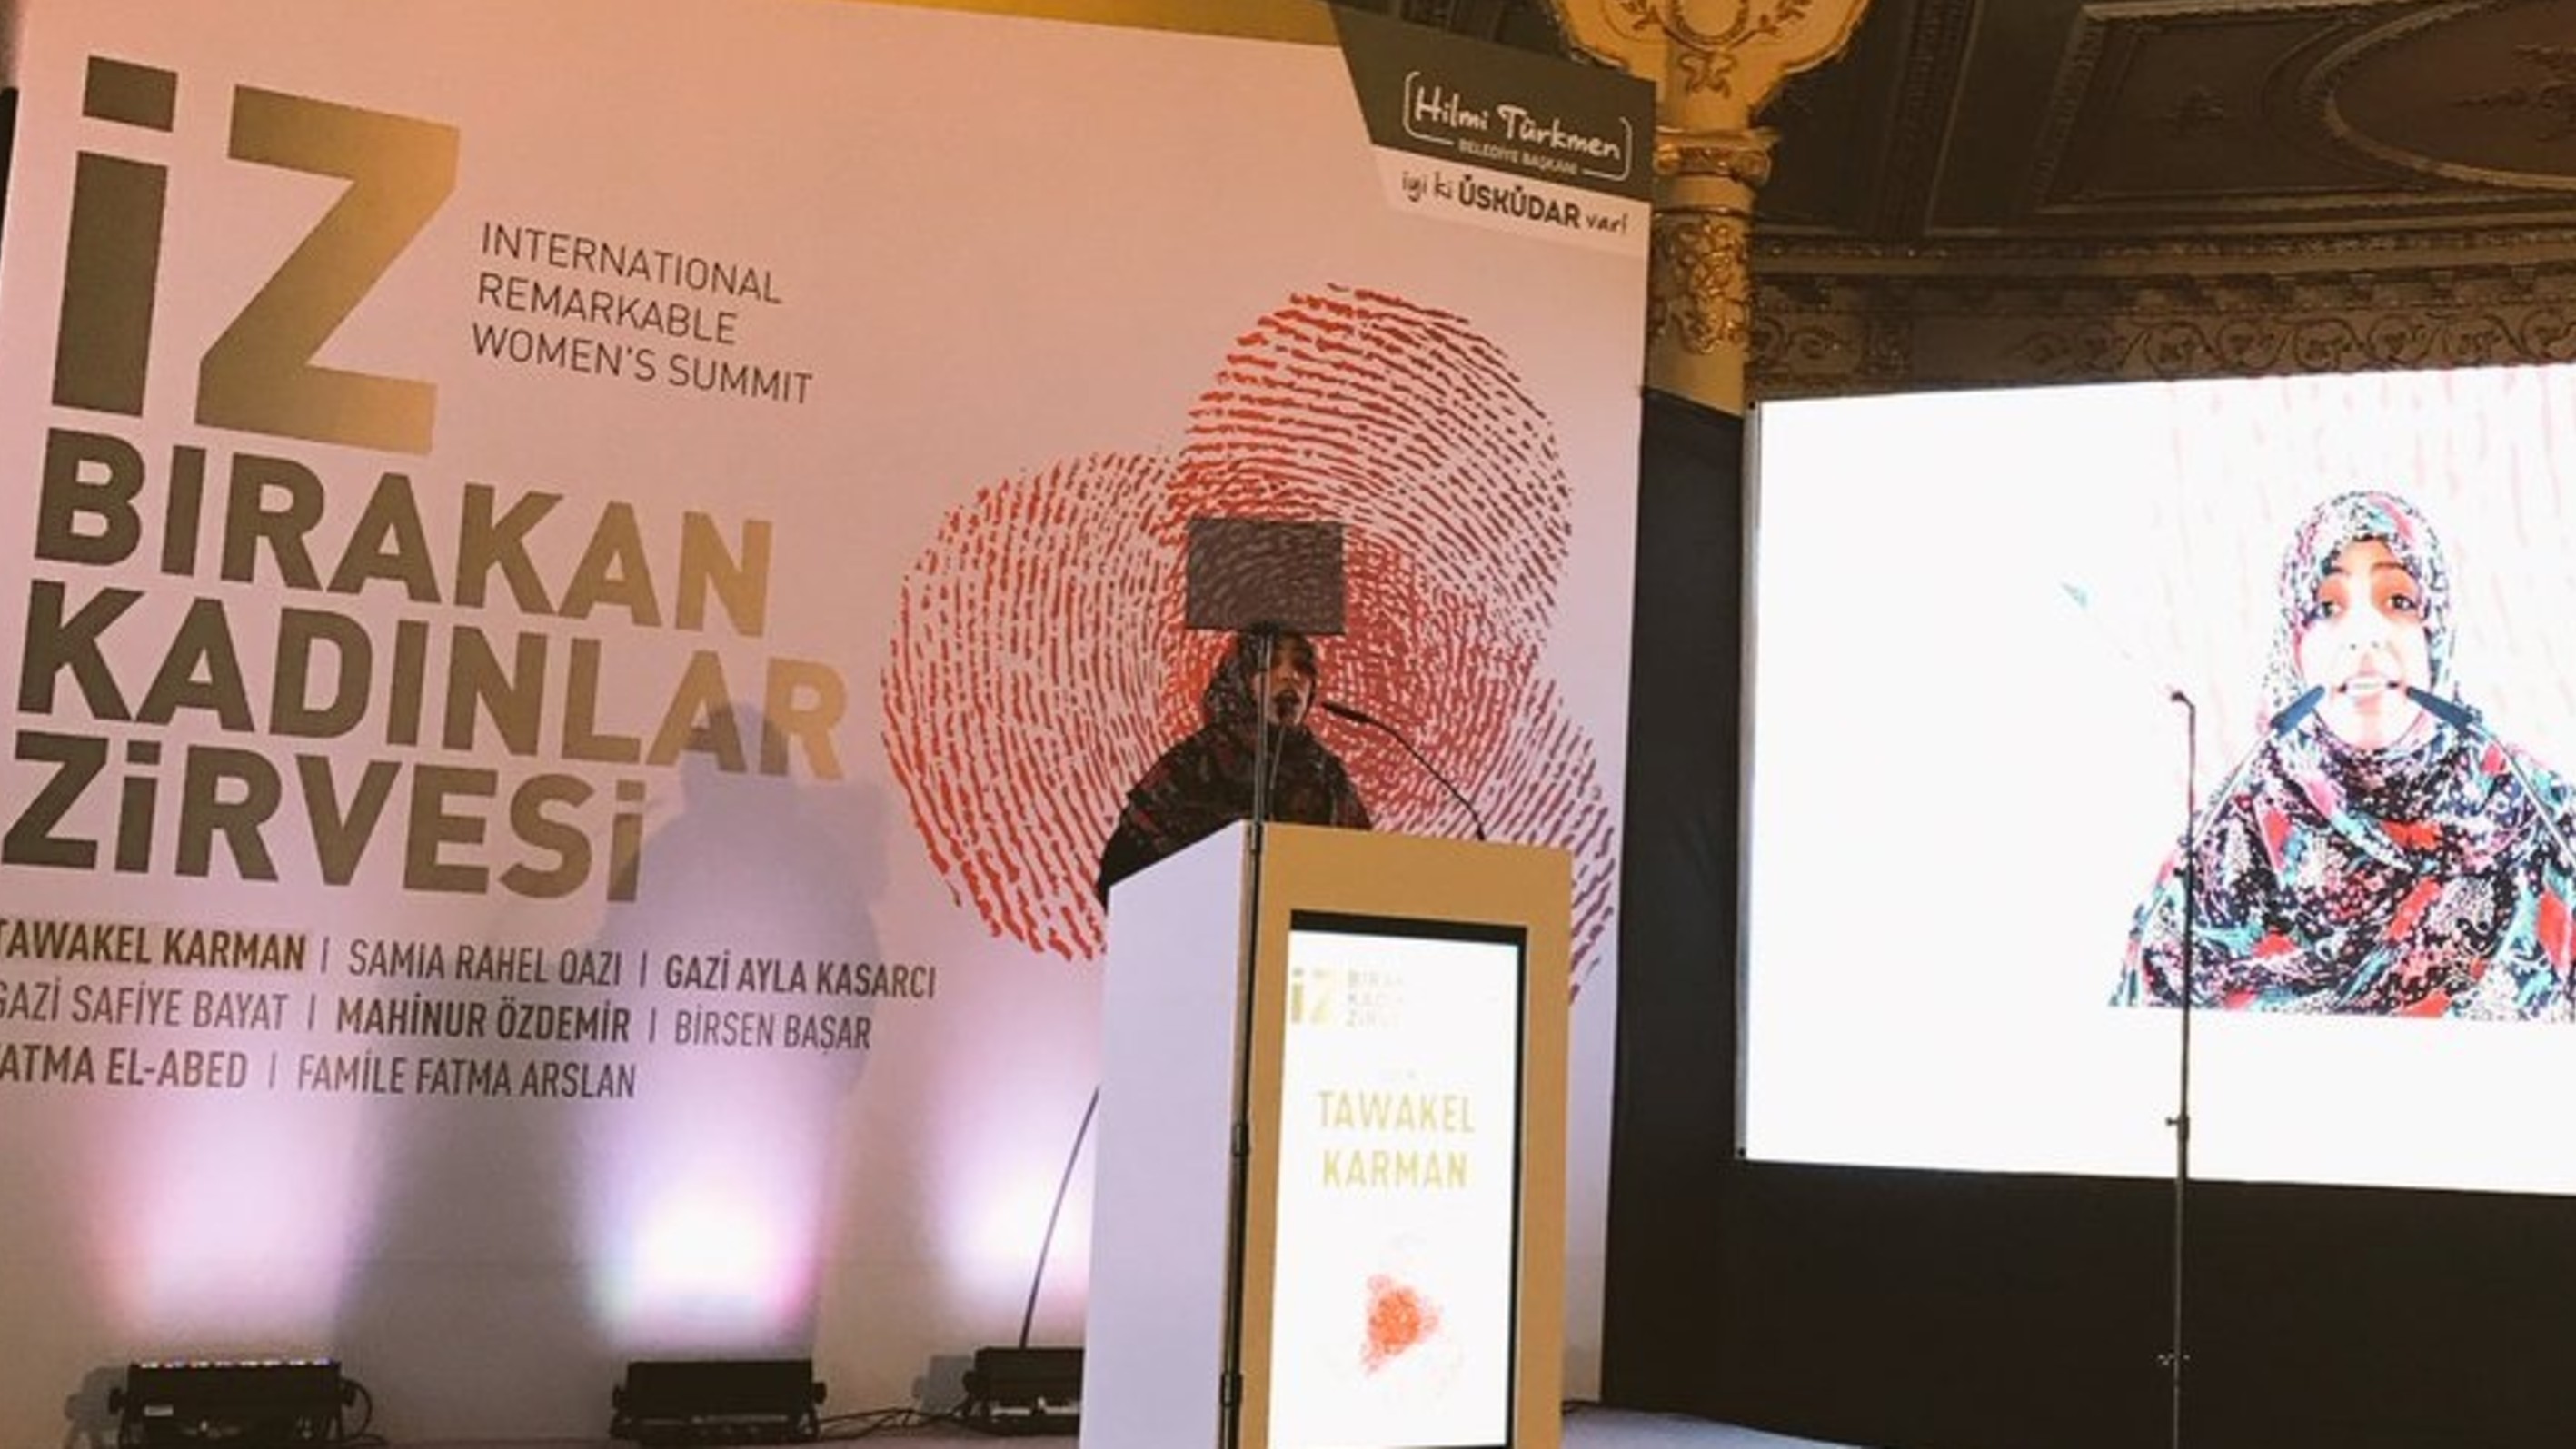 Mrs. Tawakkol Karman’s speech at the opening session of International Remarkable Women’s Summit - Istanbul